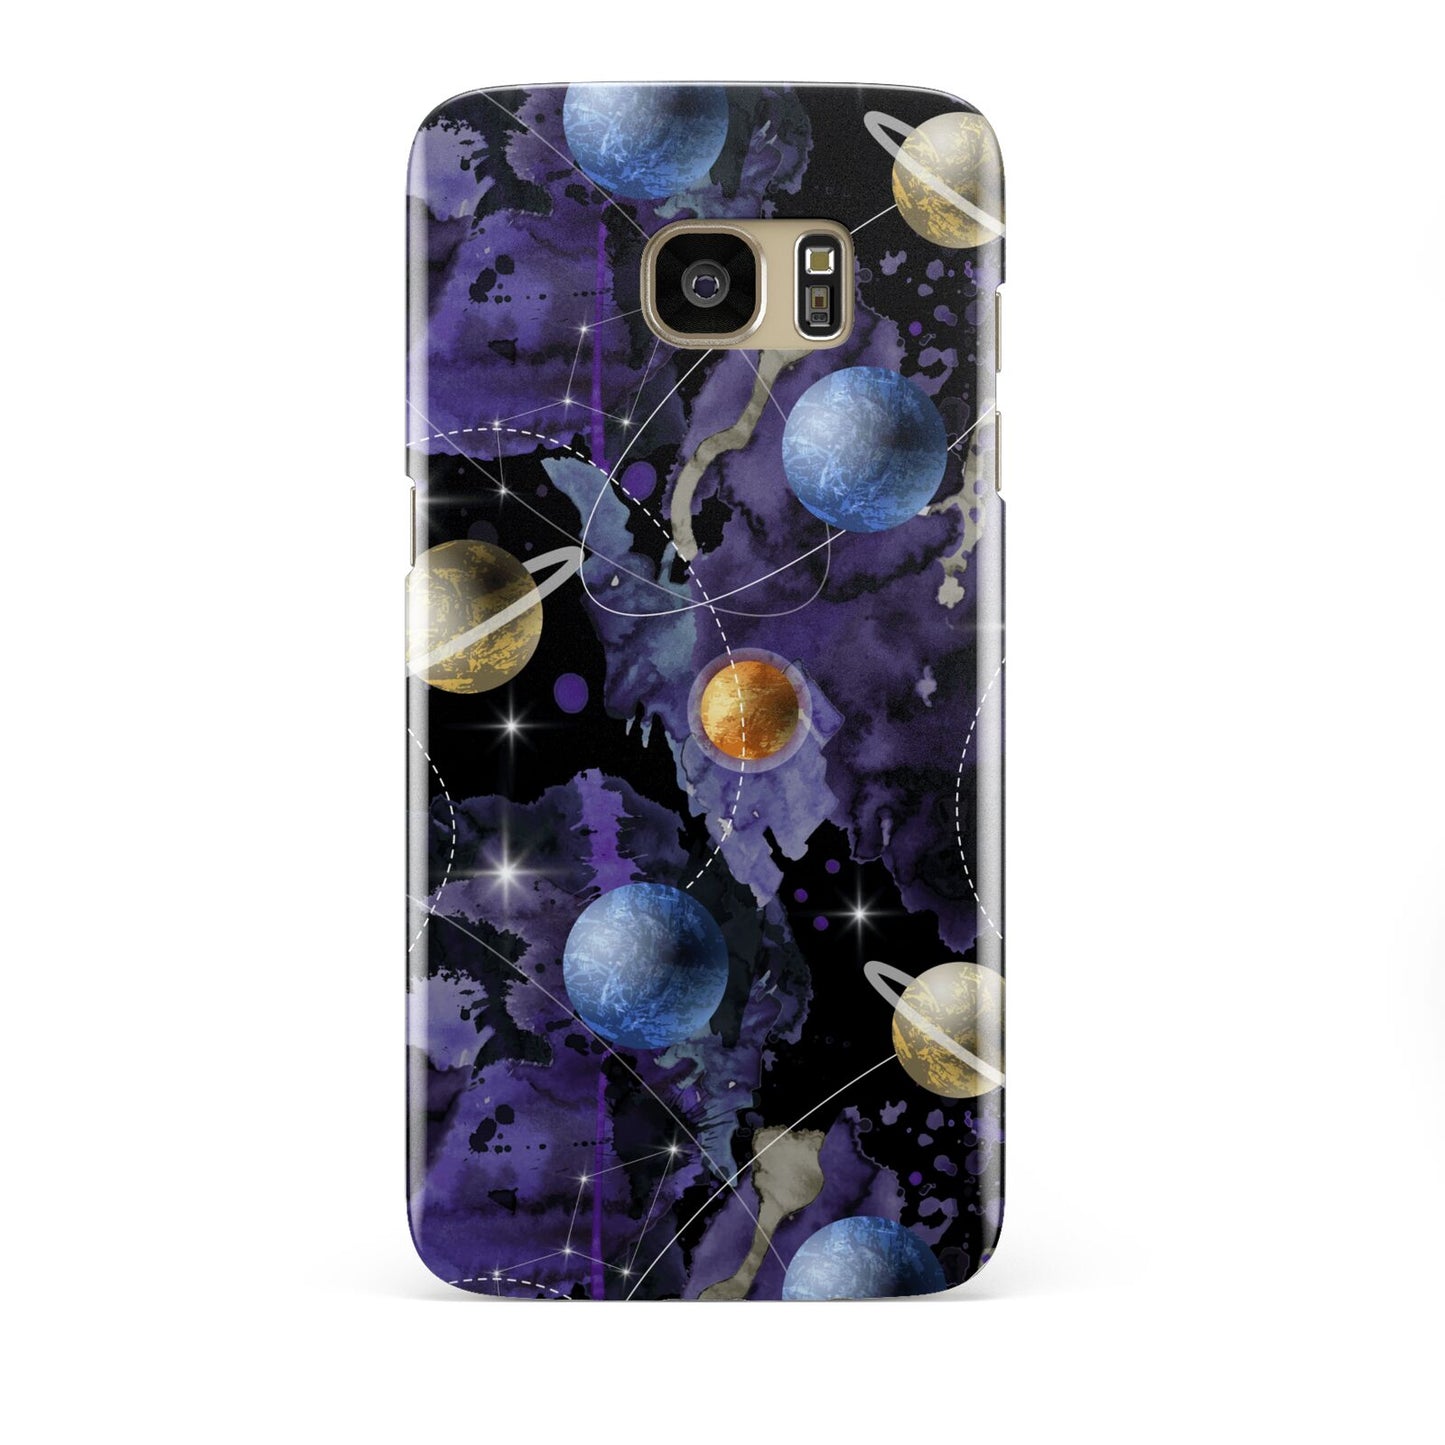 Planet Samsung Galaxy S7 Edge Case